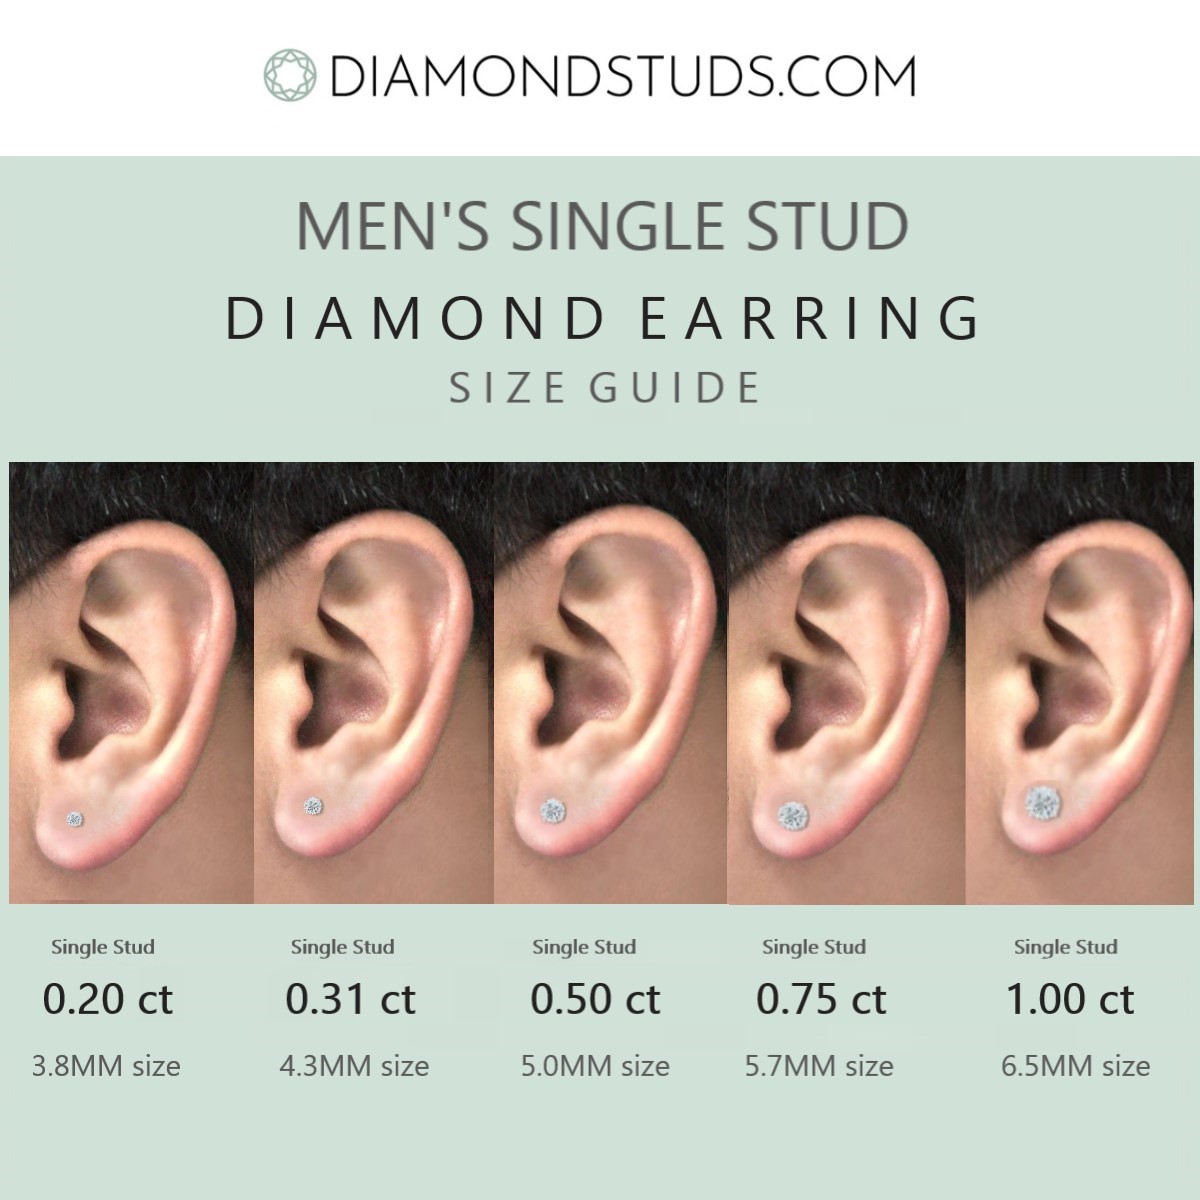 Diamond Stud Earrings 2 1/2 Total Carat Weight